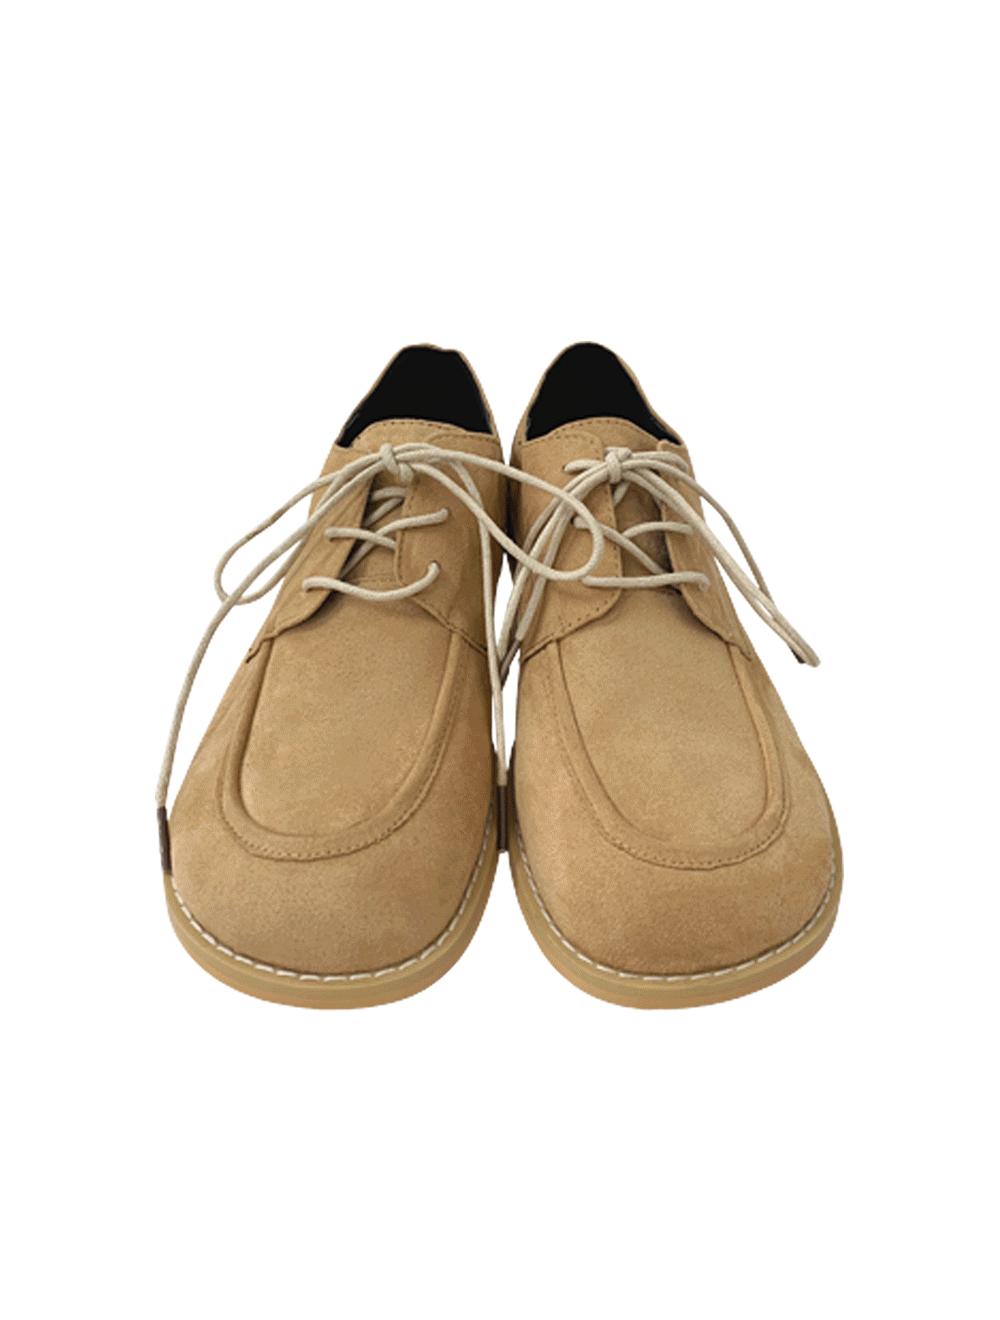 boot walker - shoes